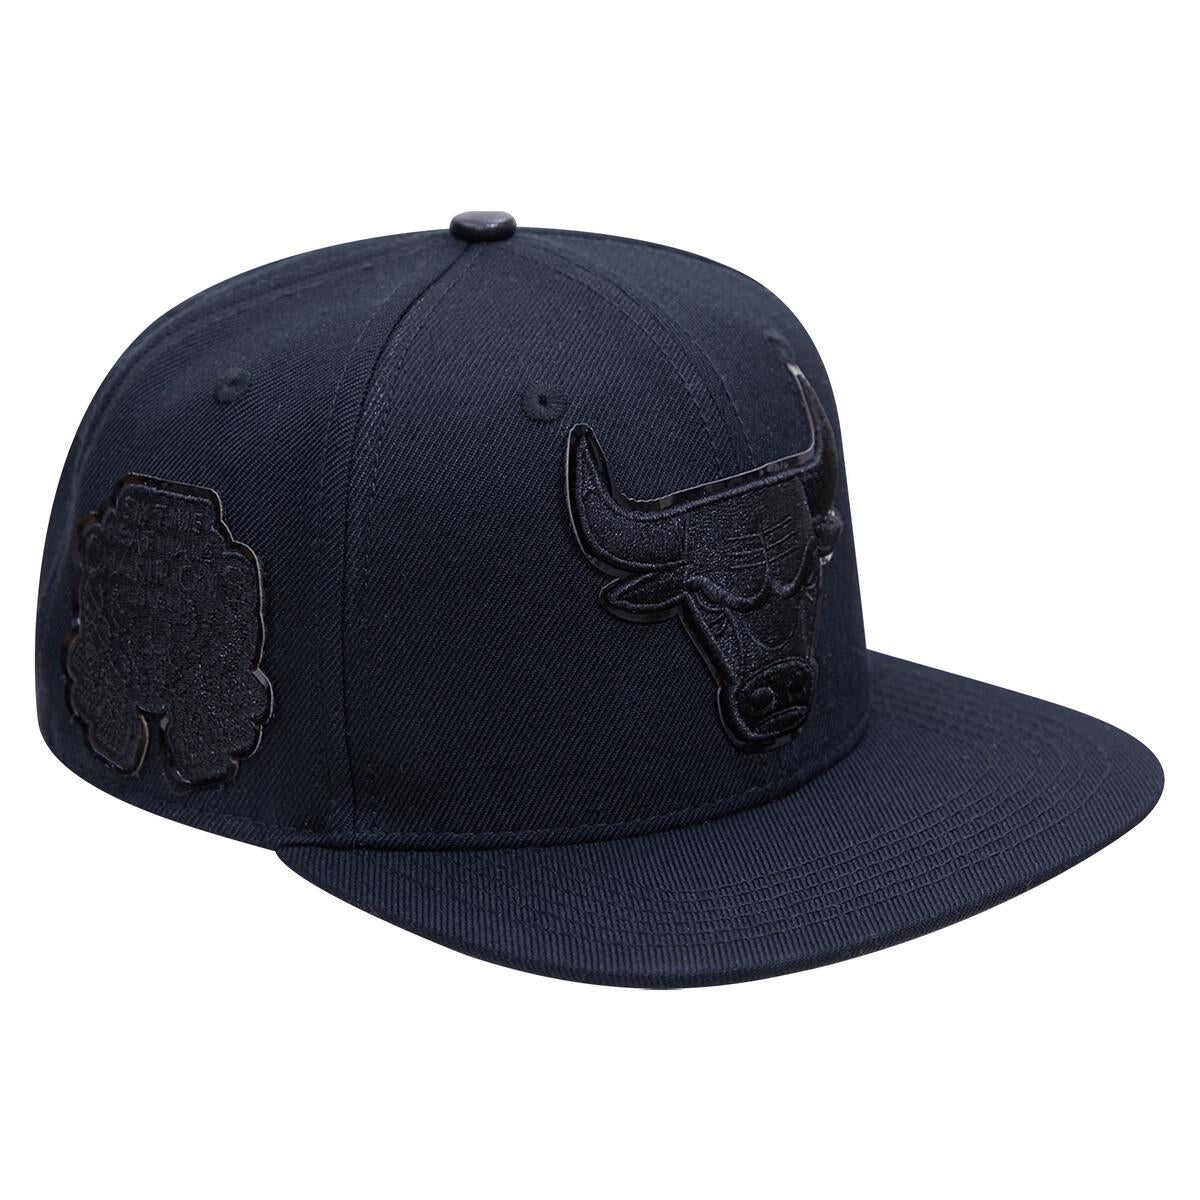 Chicago Bulls Triple Black Logo Snapback Hat - Black